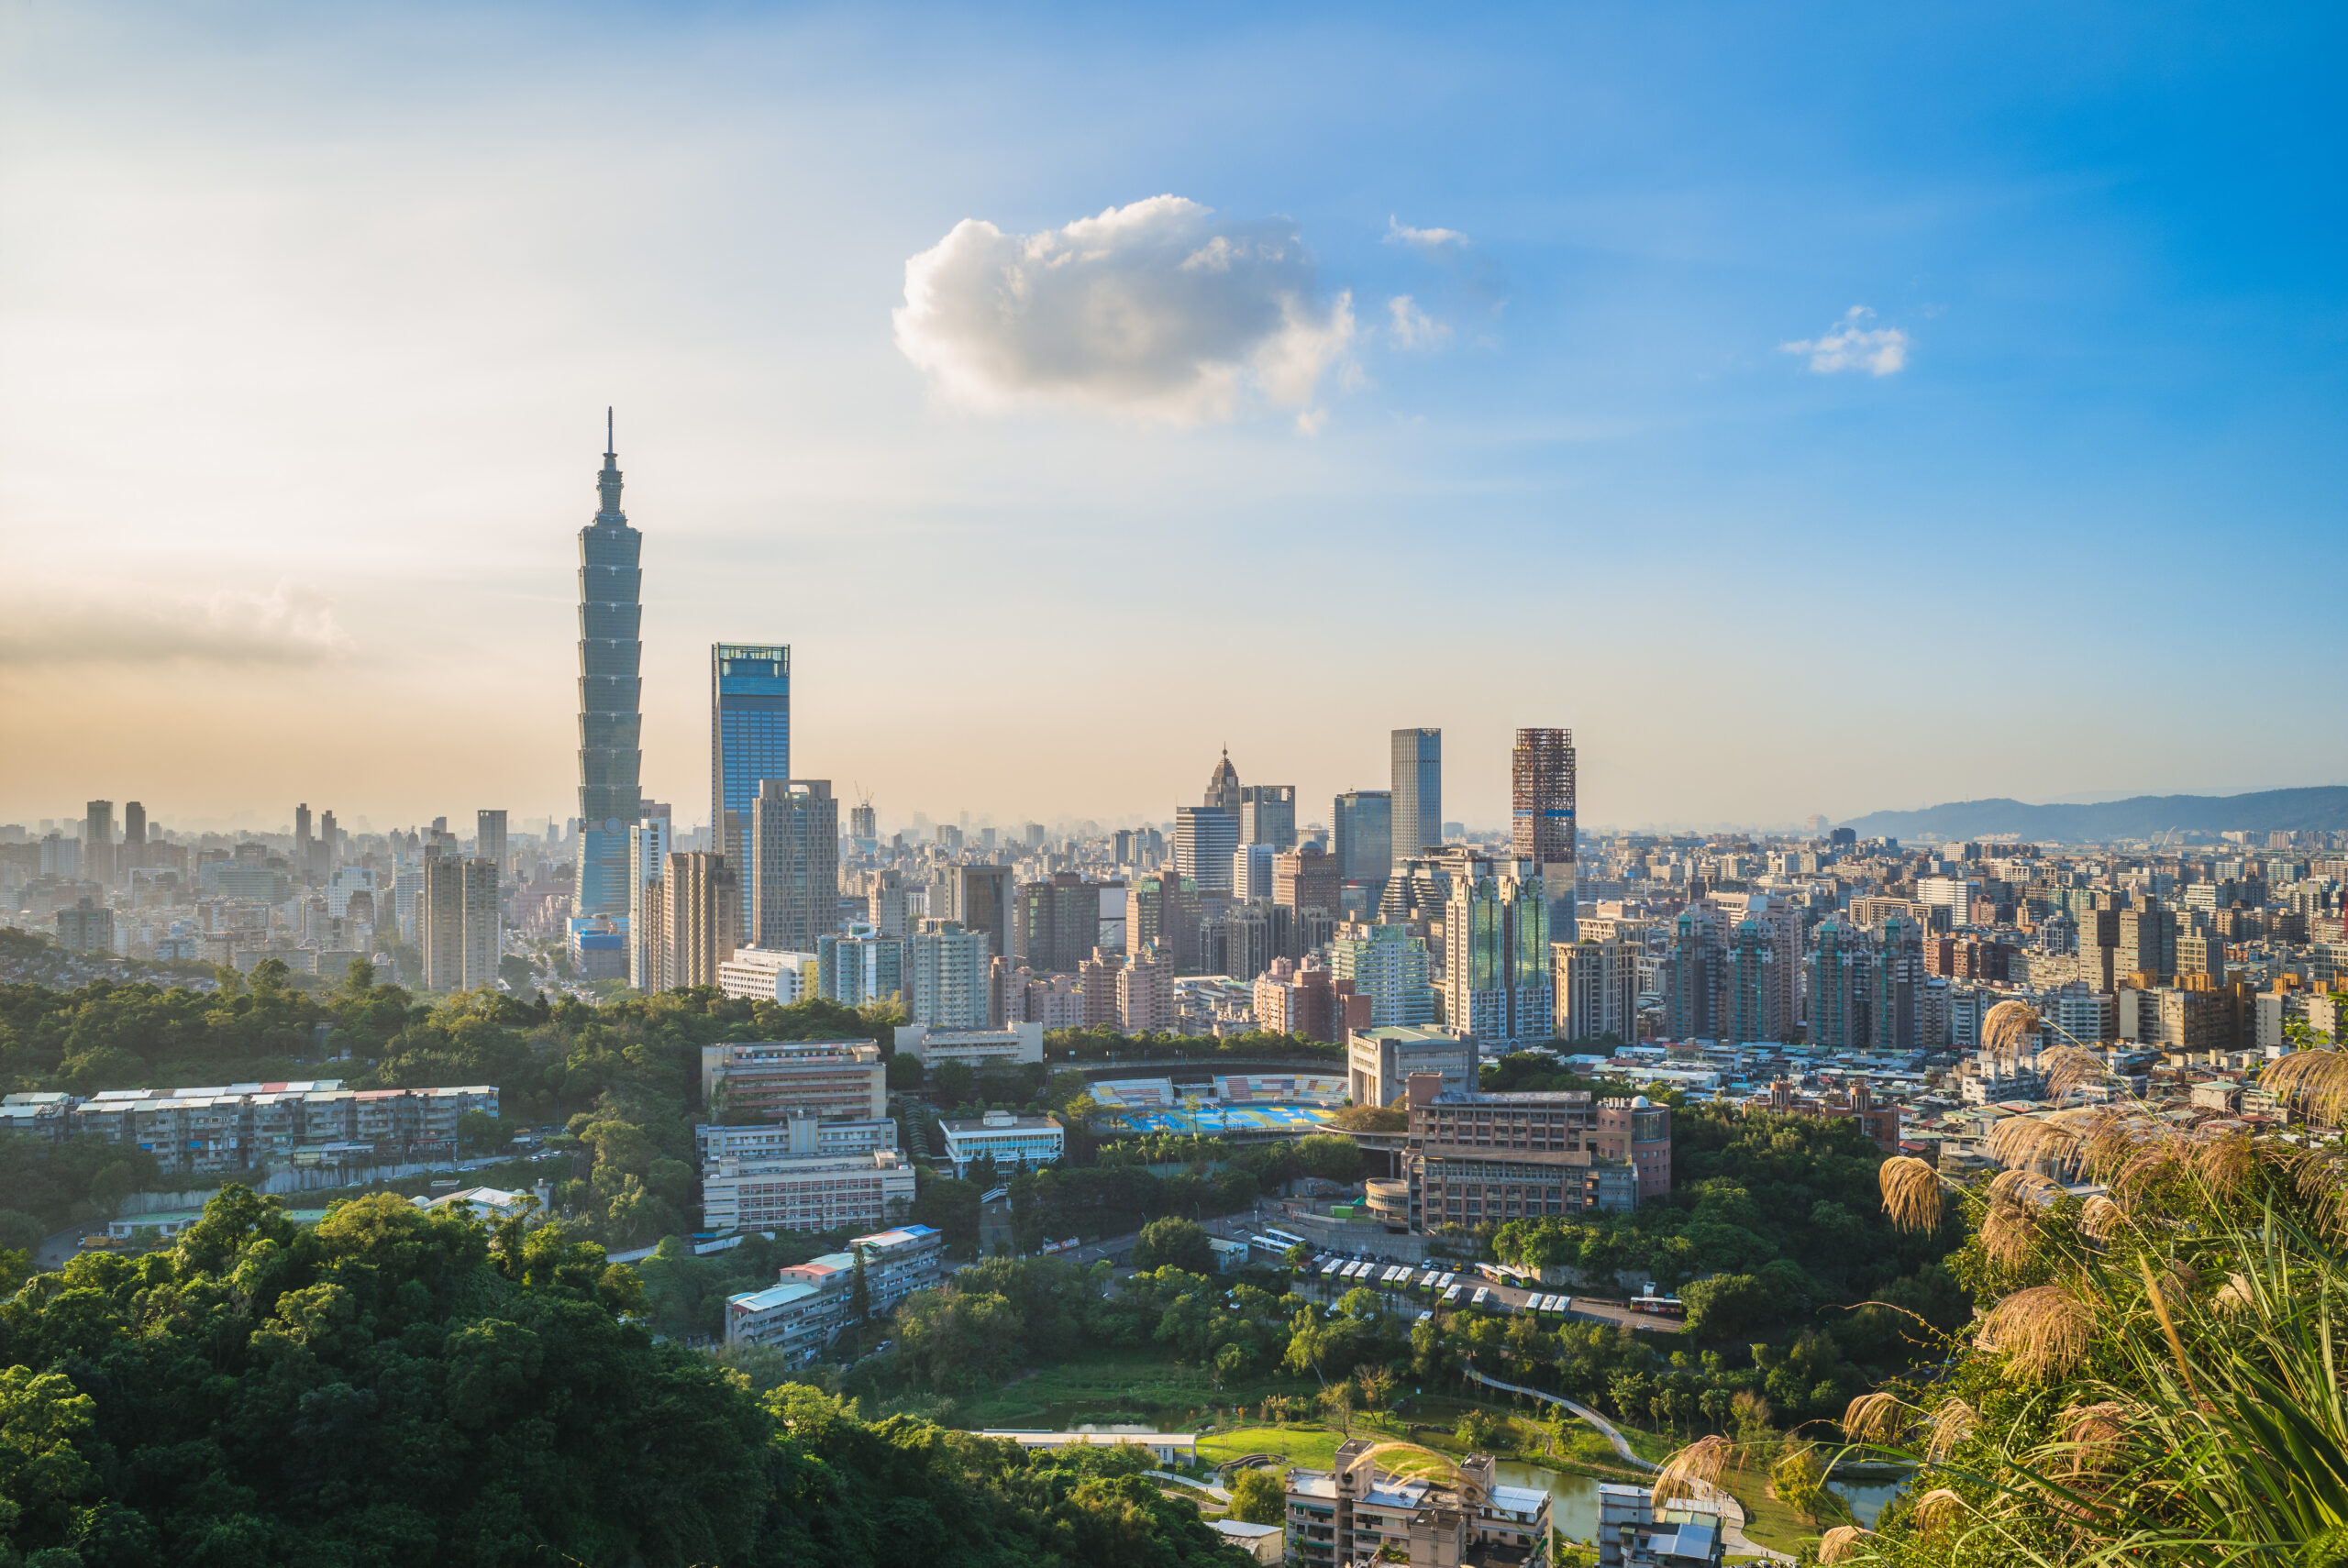 The Taipei city skyline featuring the iconic Taipei 101 building, where Morrison